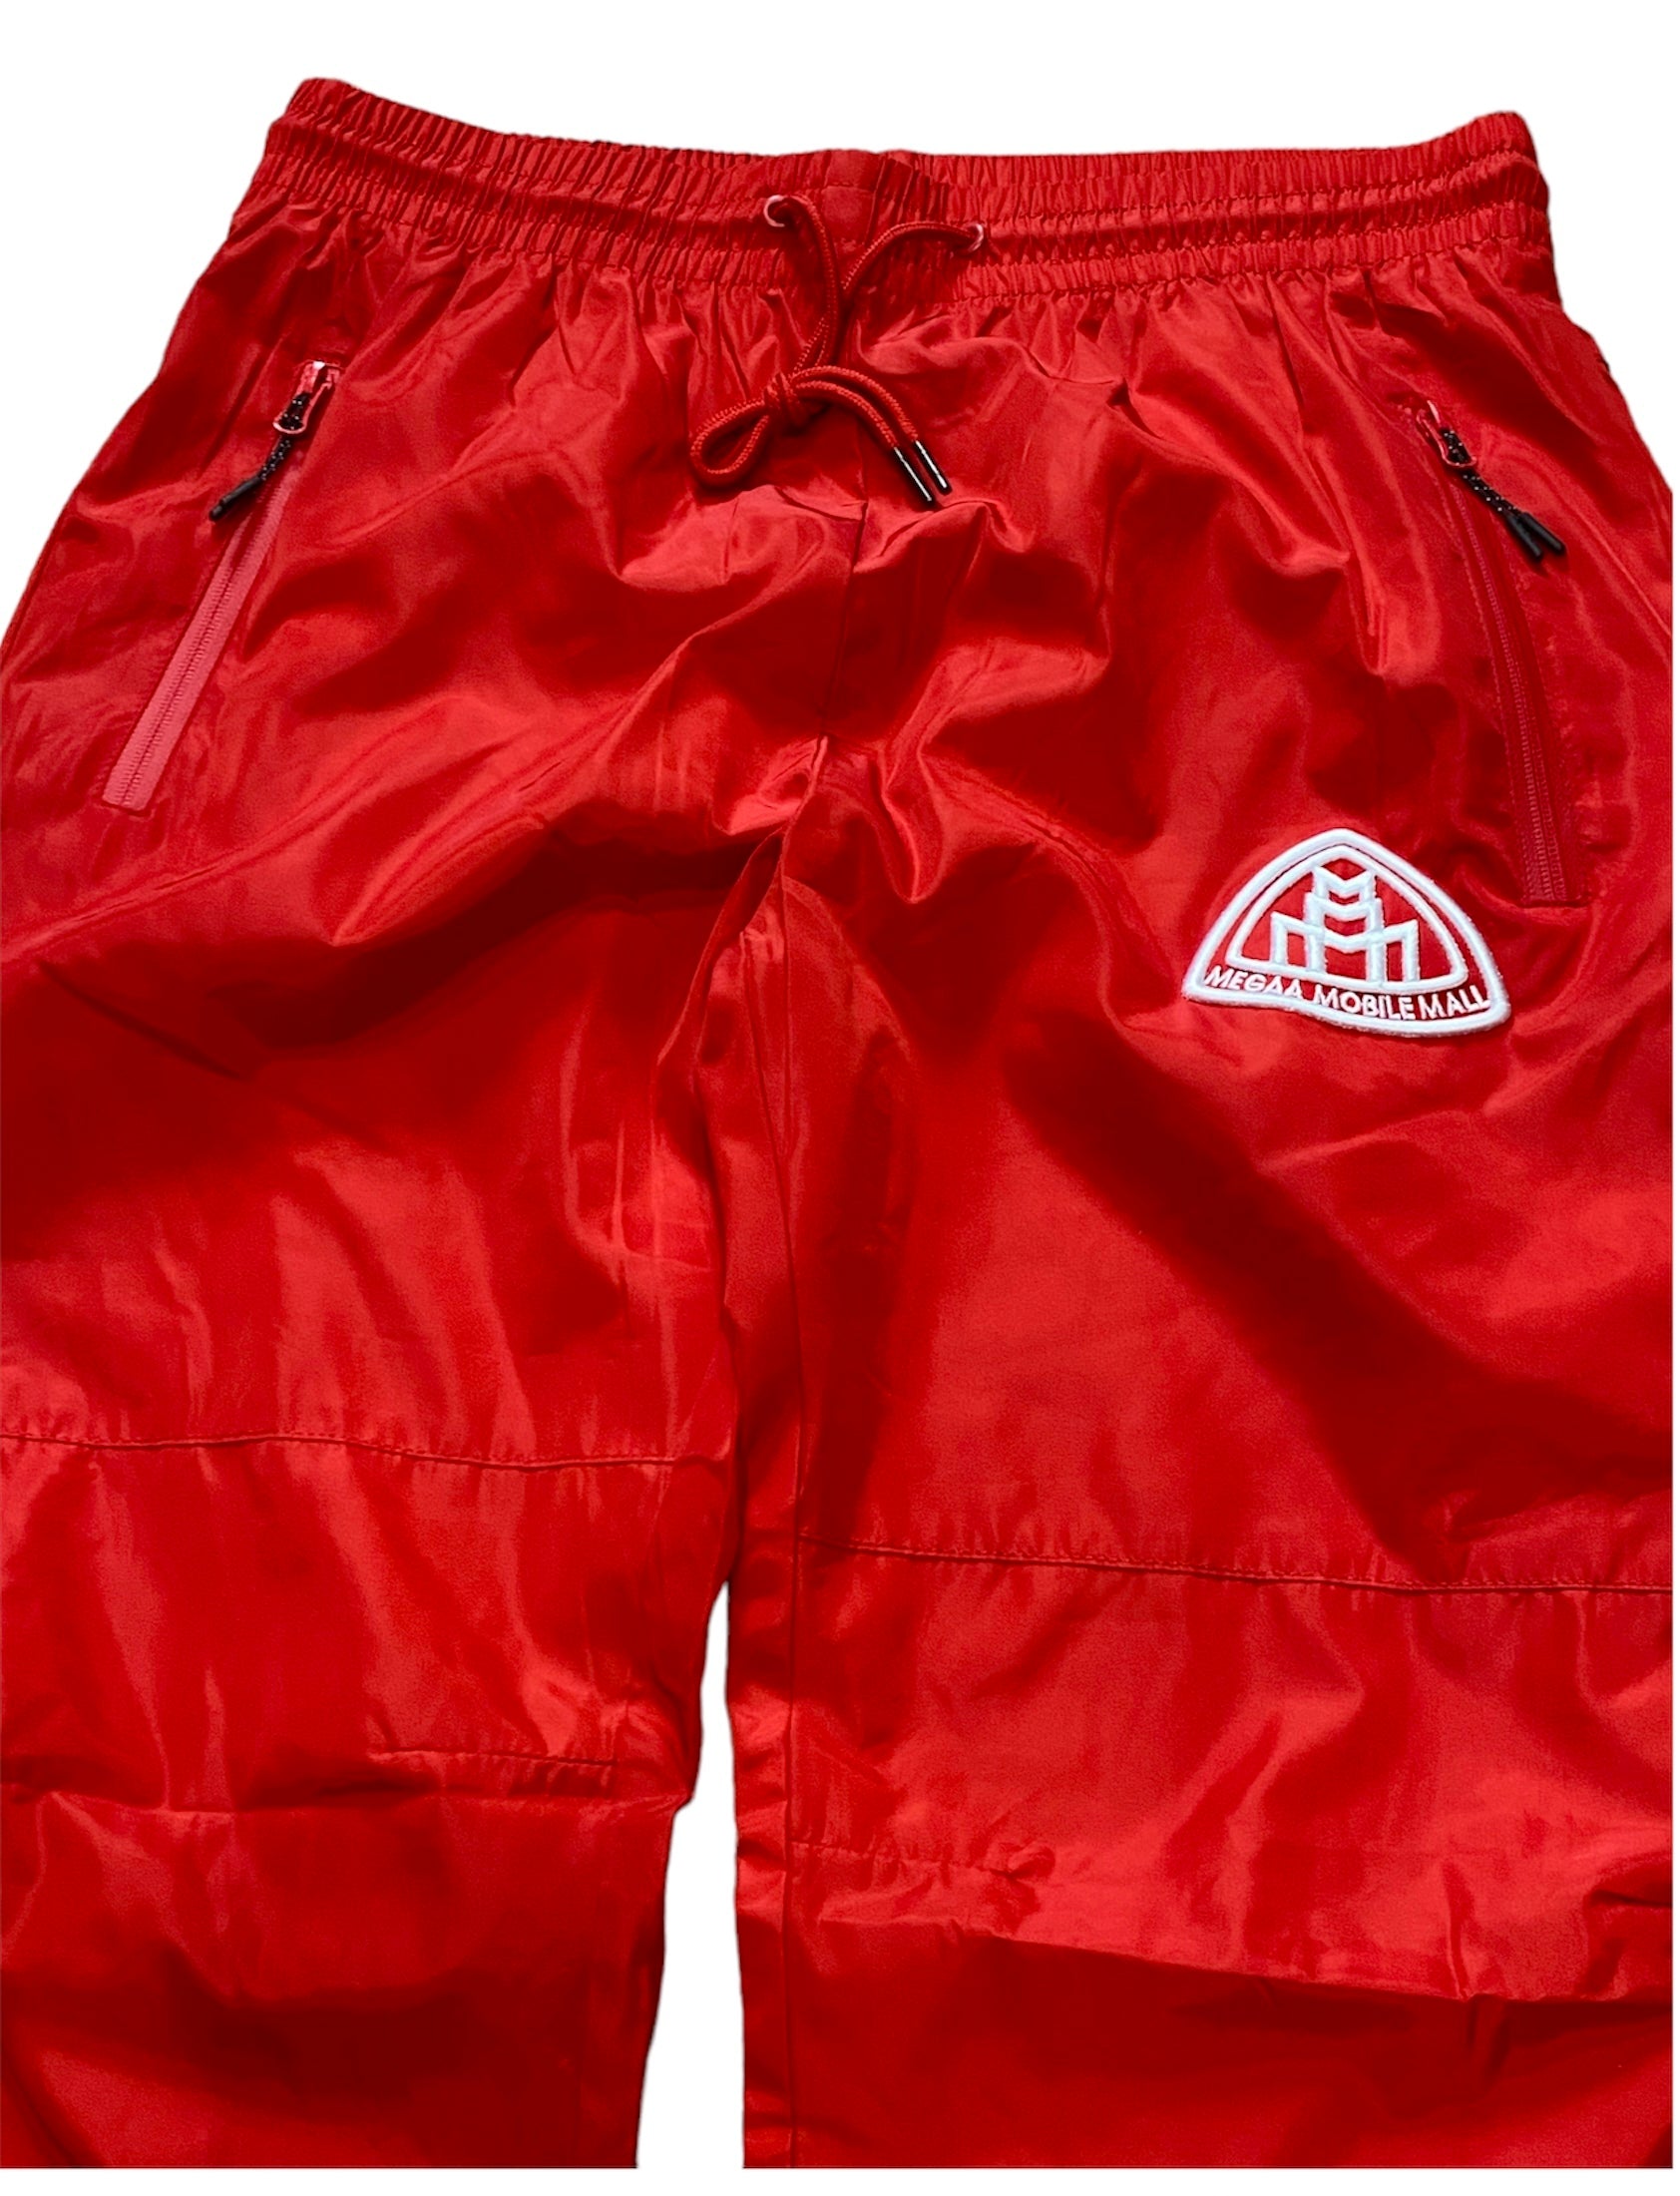 Triple M Red Tracksuit pants close up detail